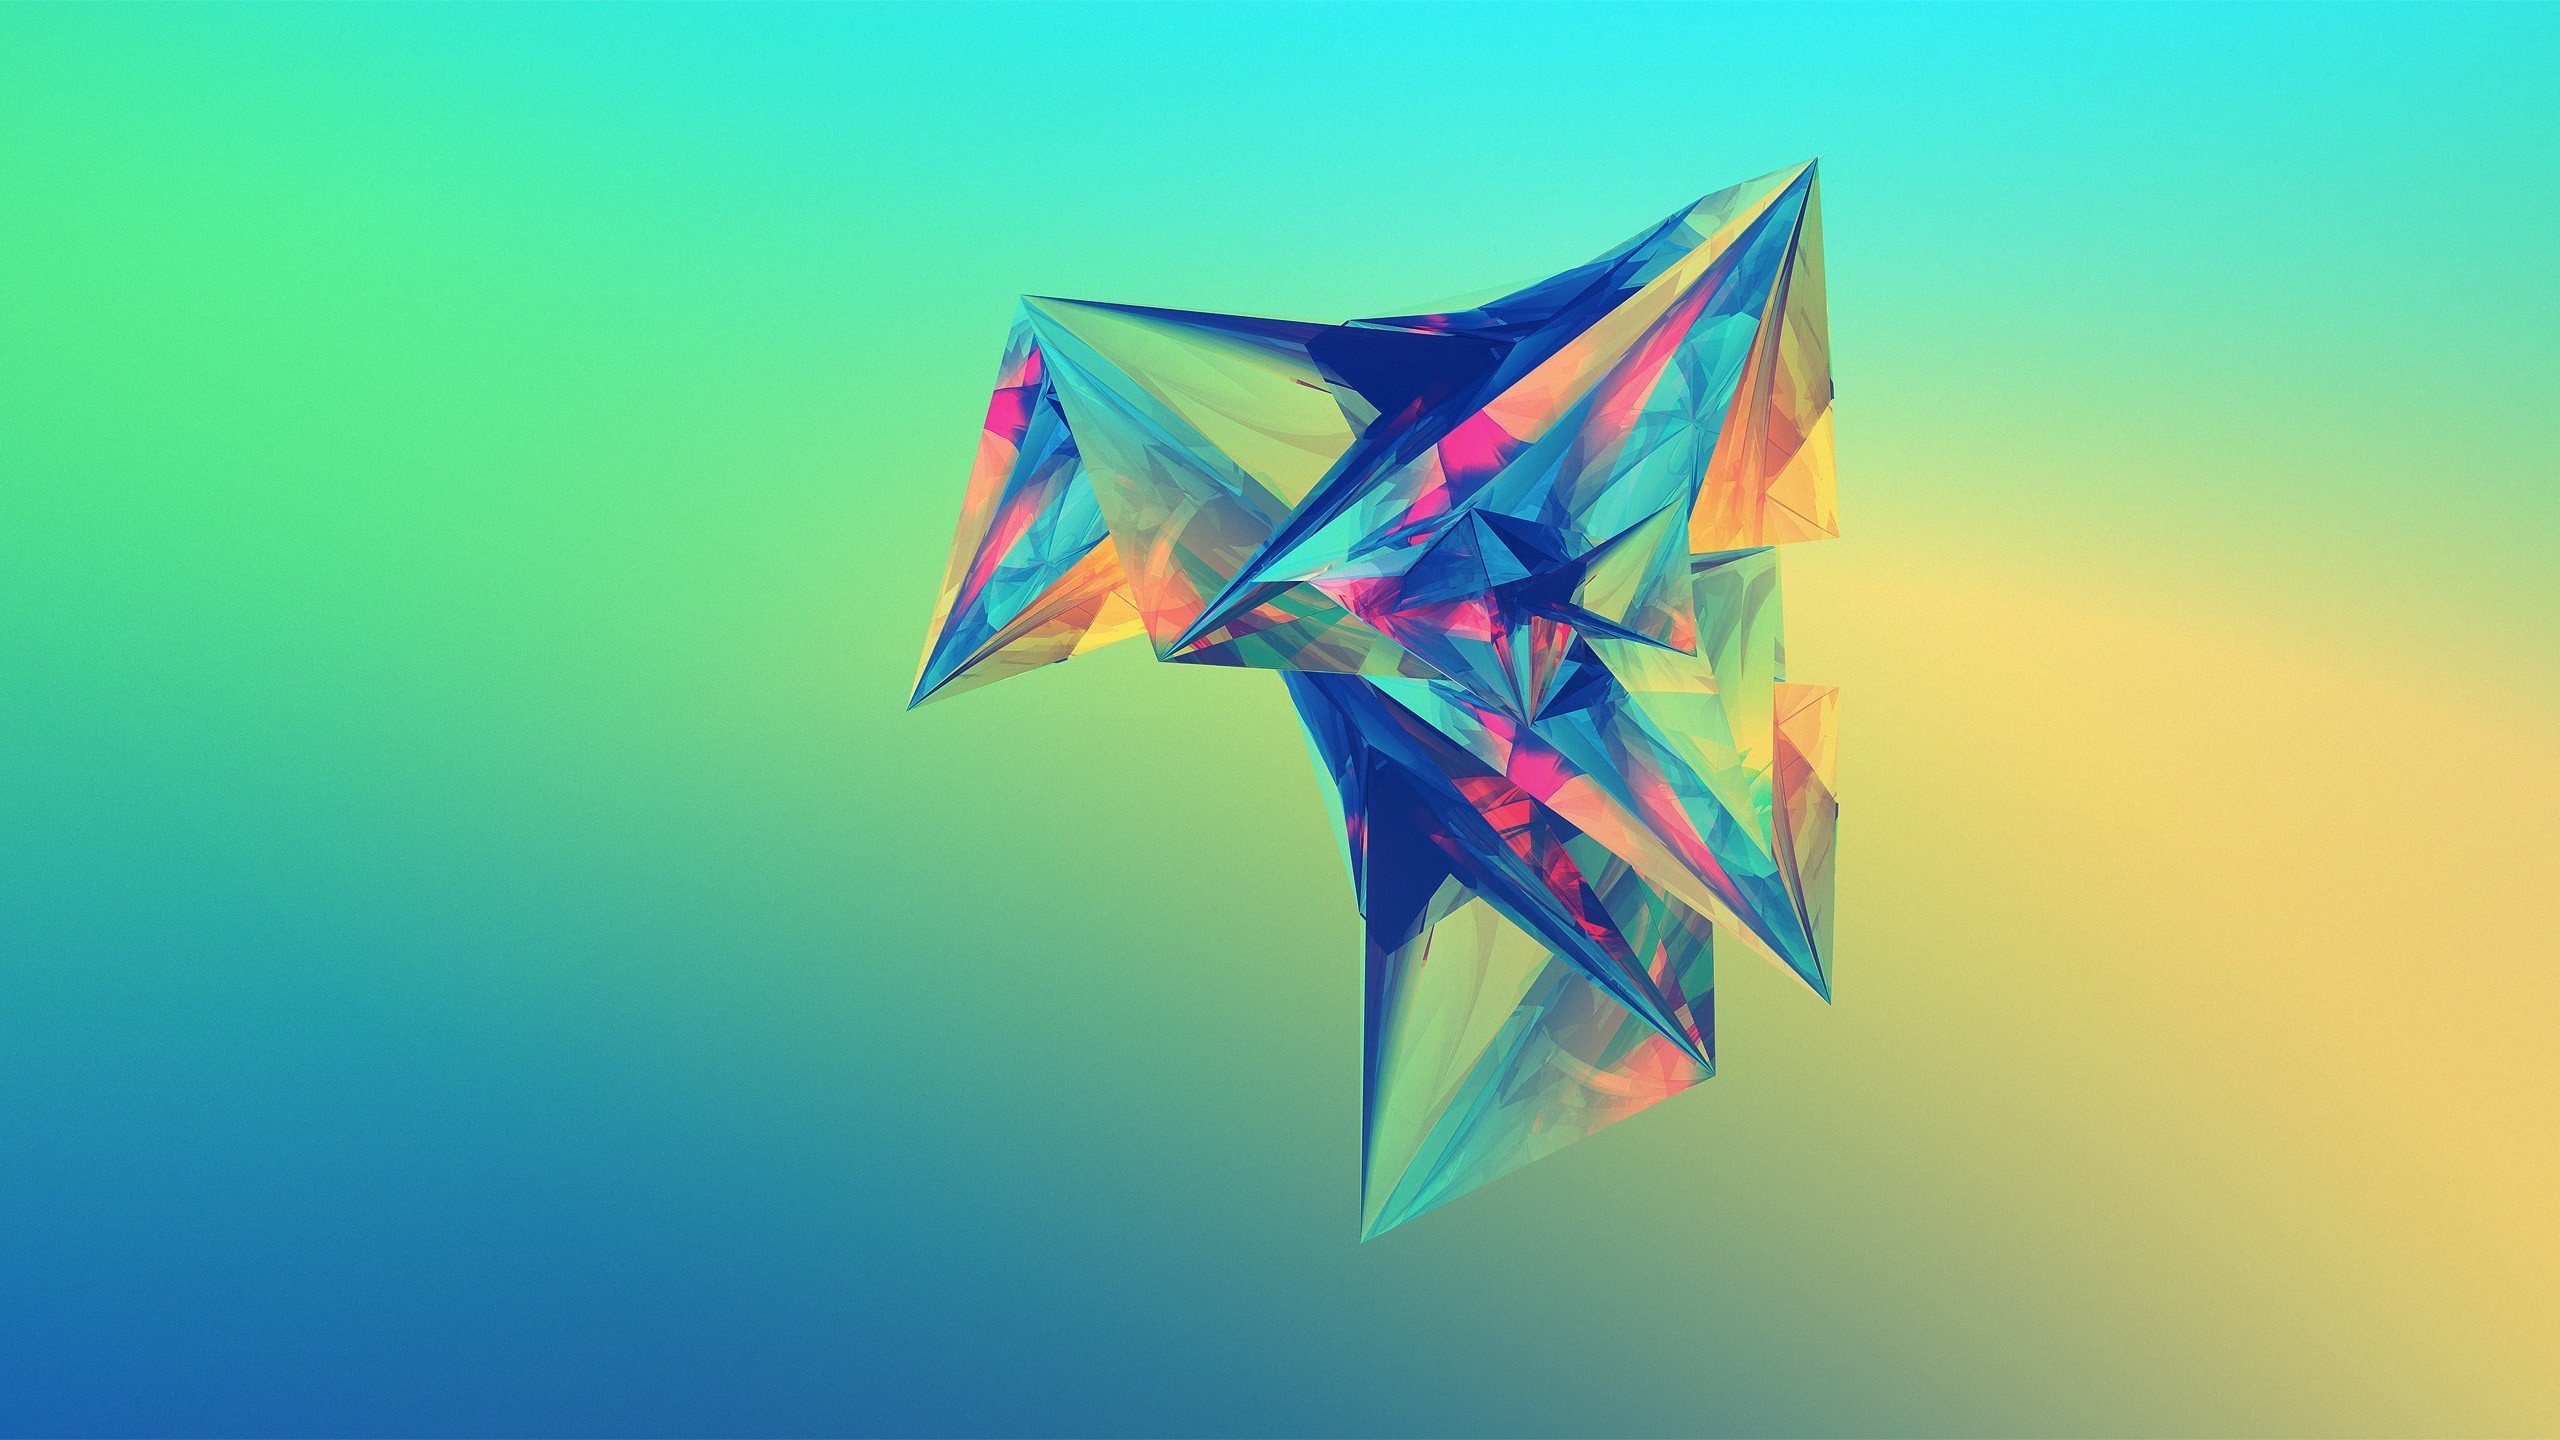 Fondos de pantalla Polígonos abstractos de colores